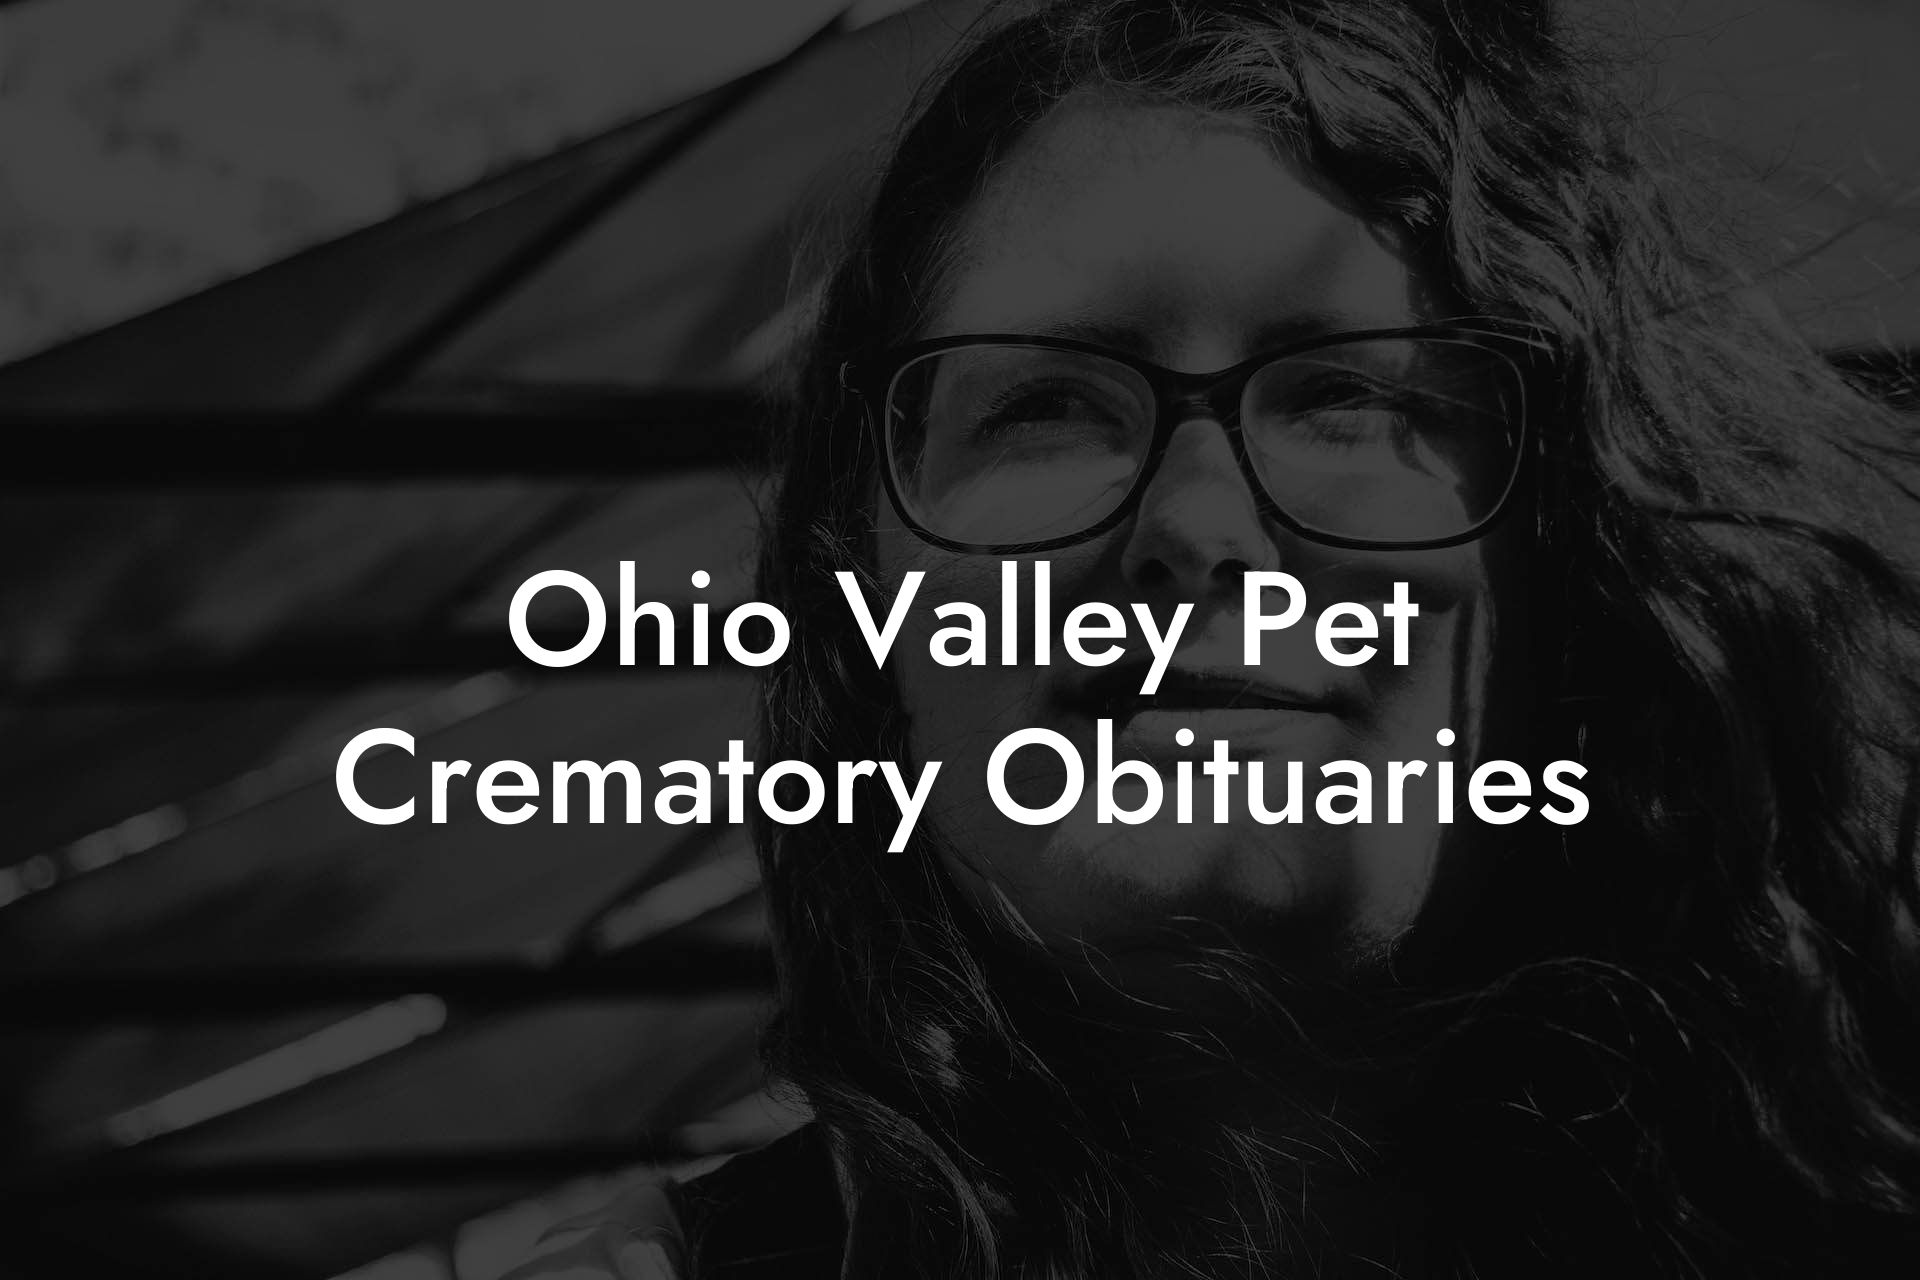 Ohio Valley Pet Crematory Obituaries